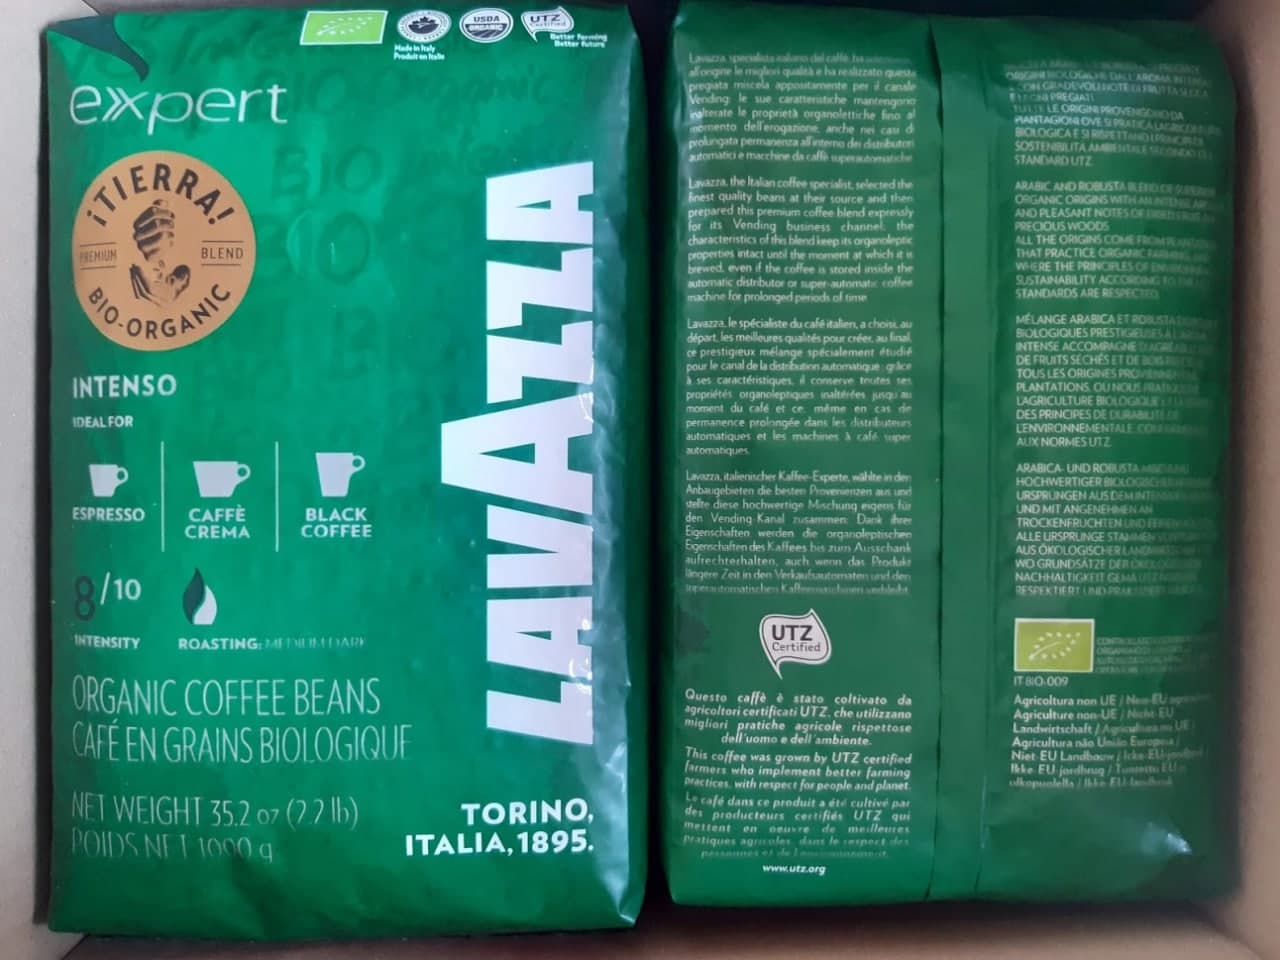 Kohvioad "LAVAZZA" Expert ¡Tierra! Bio Organic Intenso